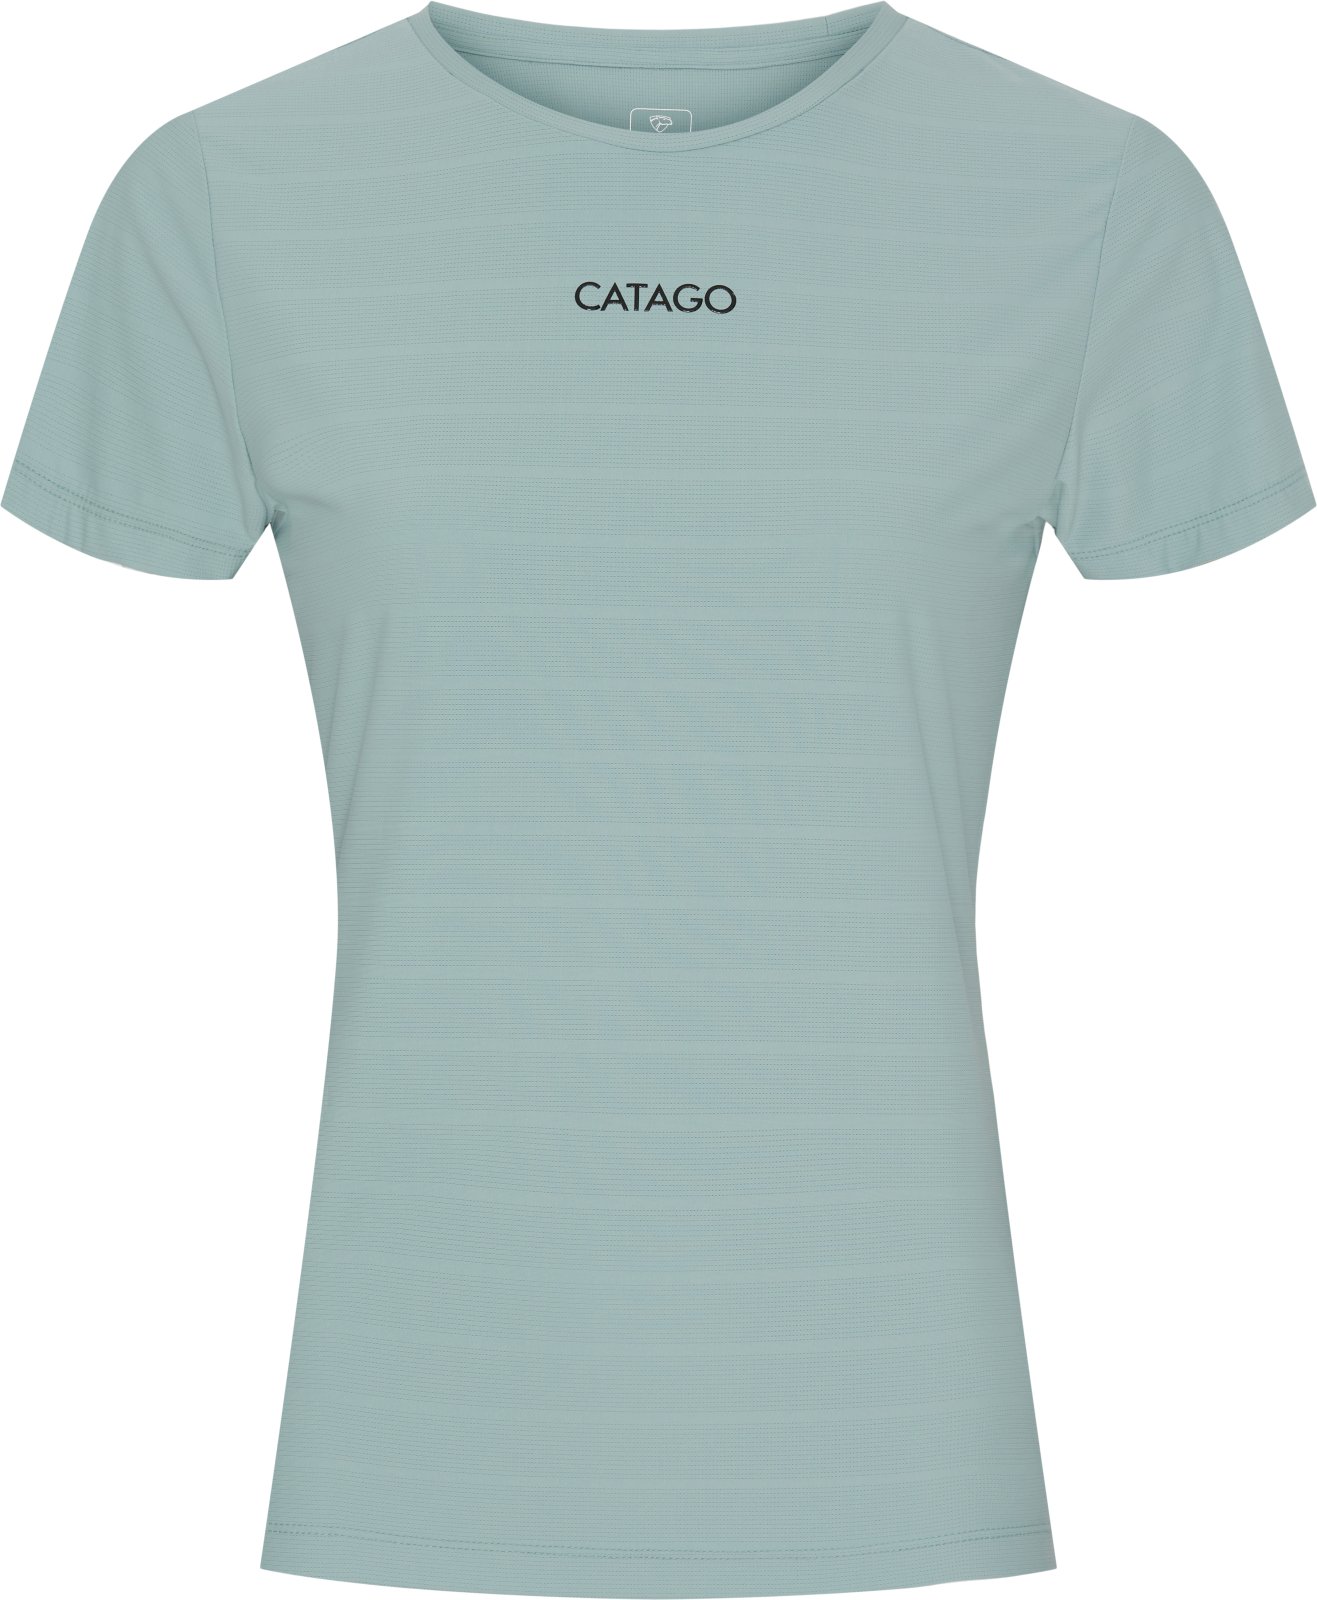 Catago Novel T-shirt - Stone Blue 